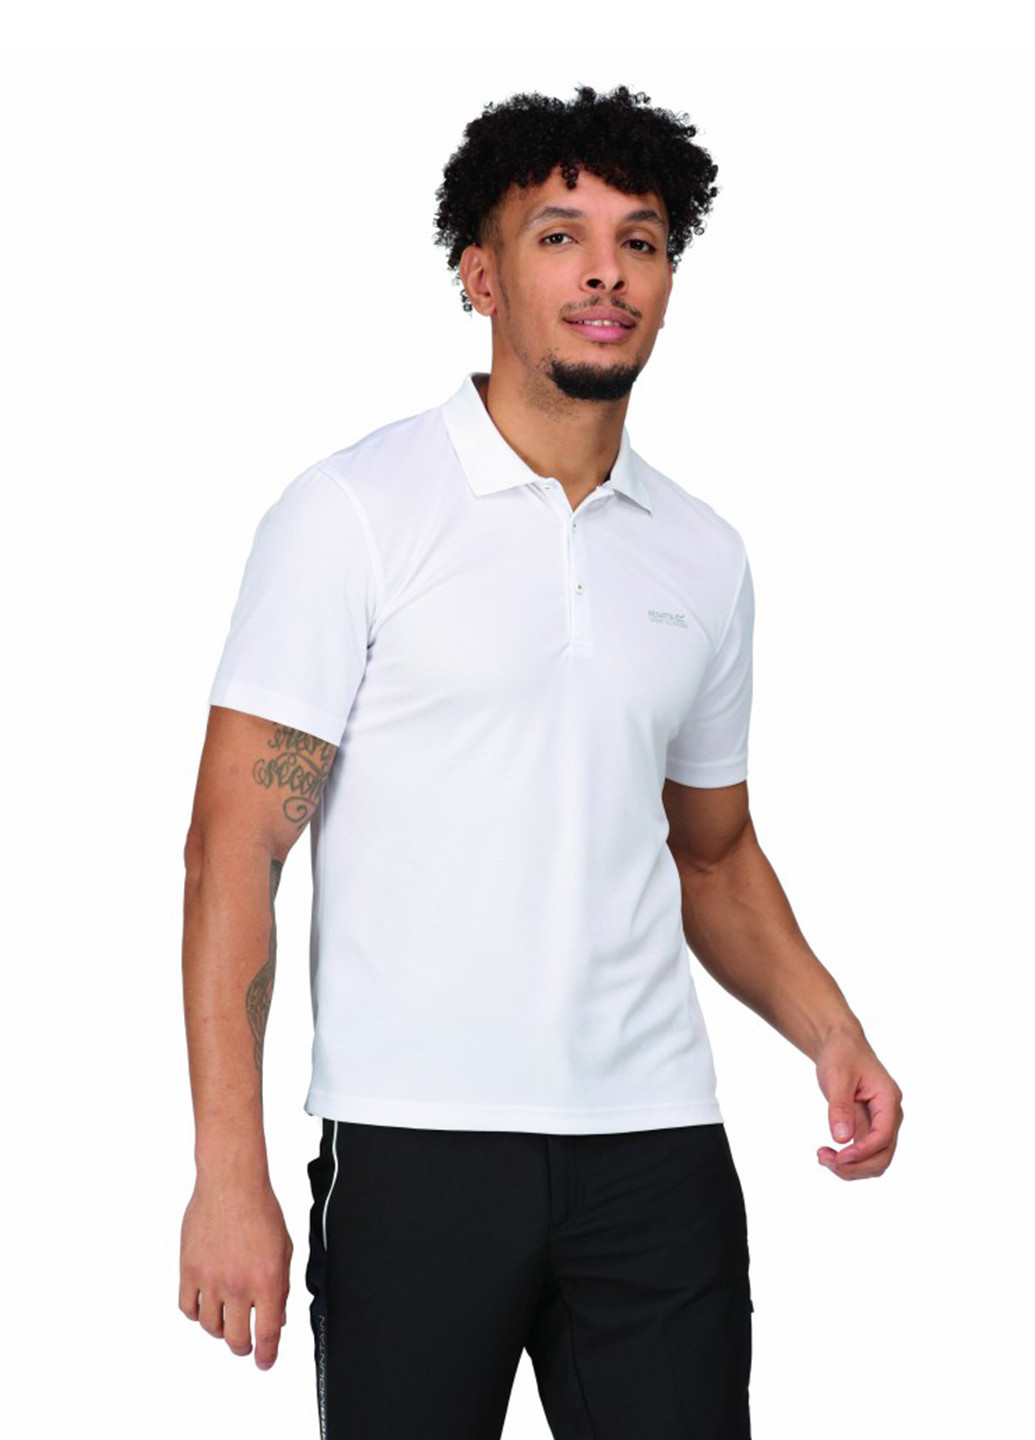 Белая футболка-поло для мужчин Regatta с логотипом